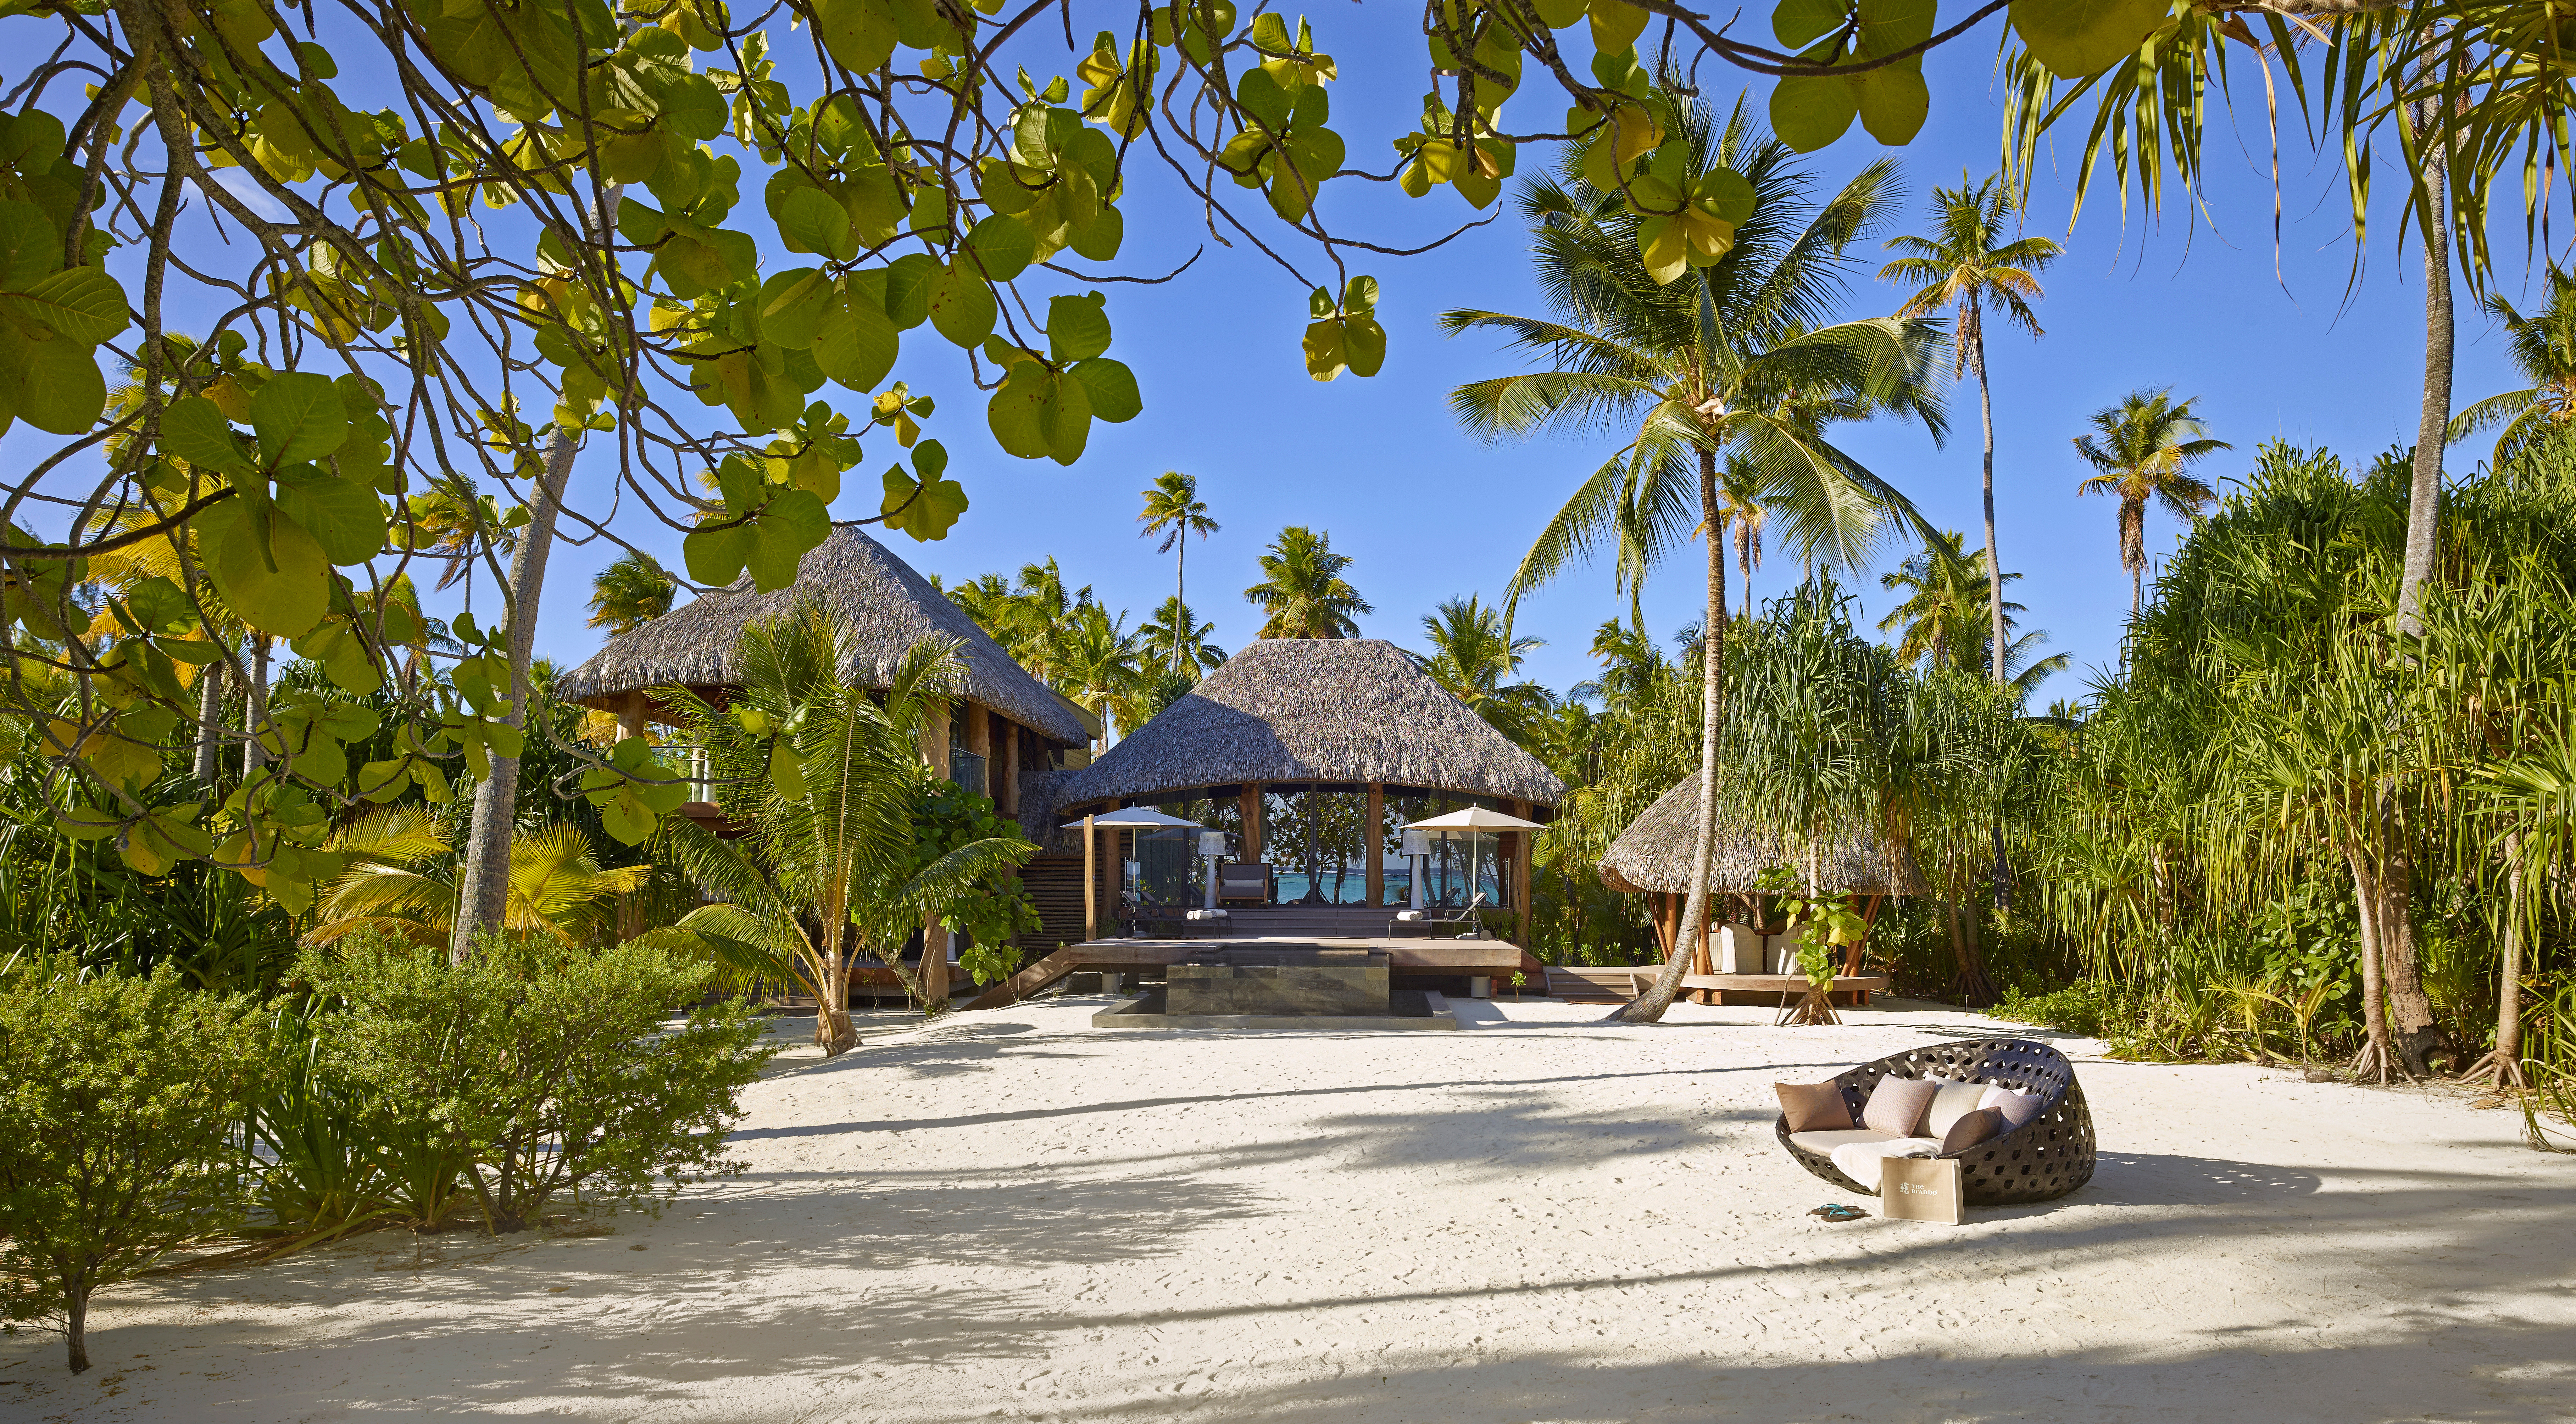 A two bedroom villa at the Brando in French Polynesia